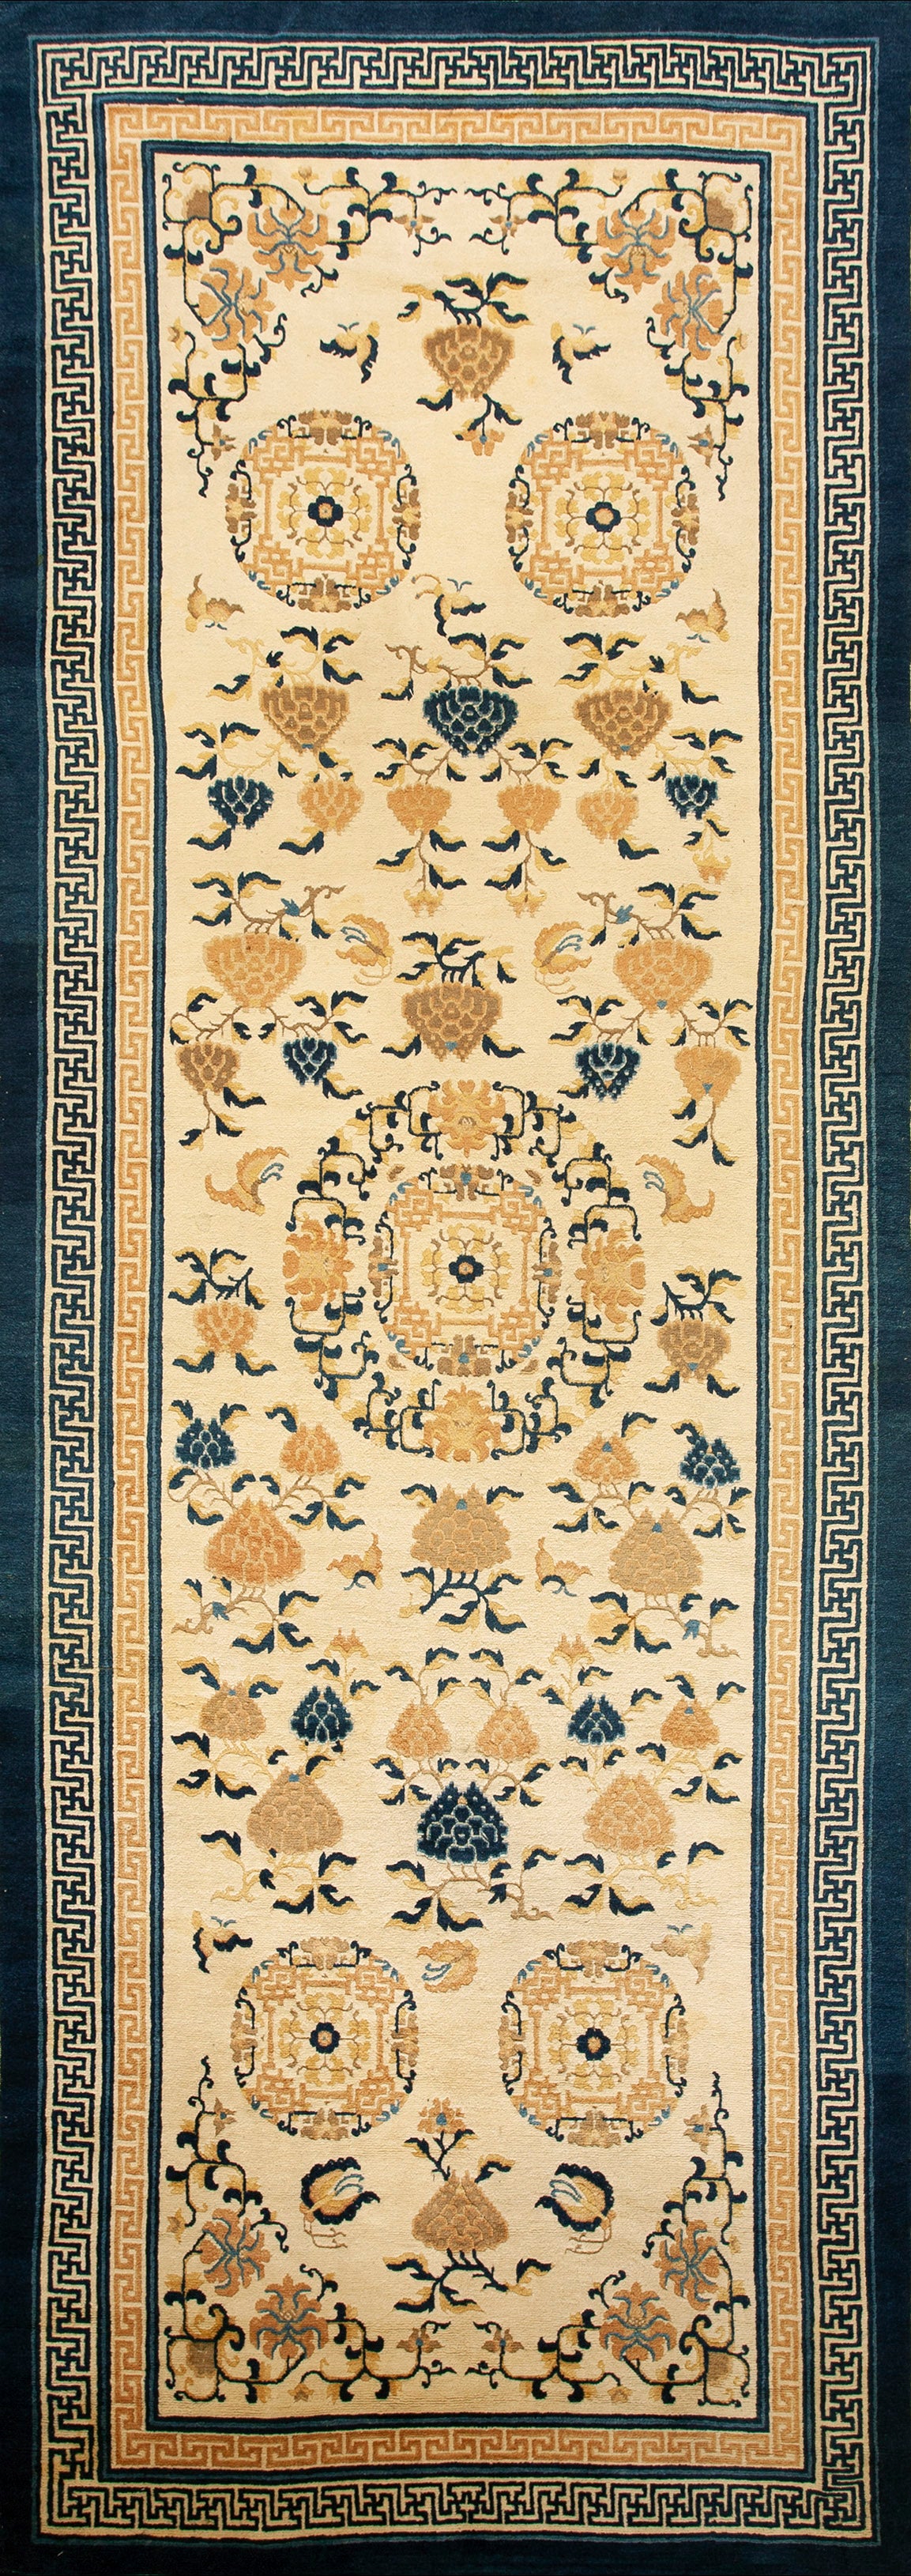 Mid 19th Century Chinese Ningxia Gallery Carpet (5'8" x 16'6" - 173 x 473 cm)